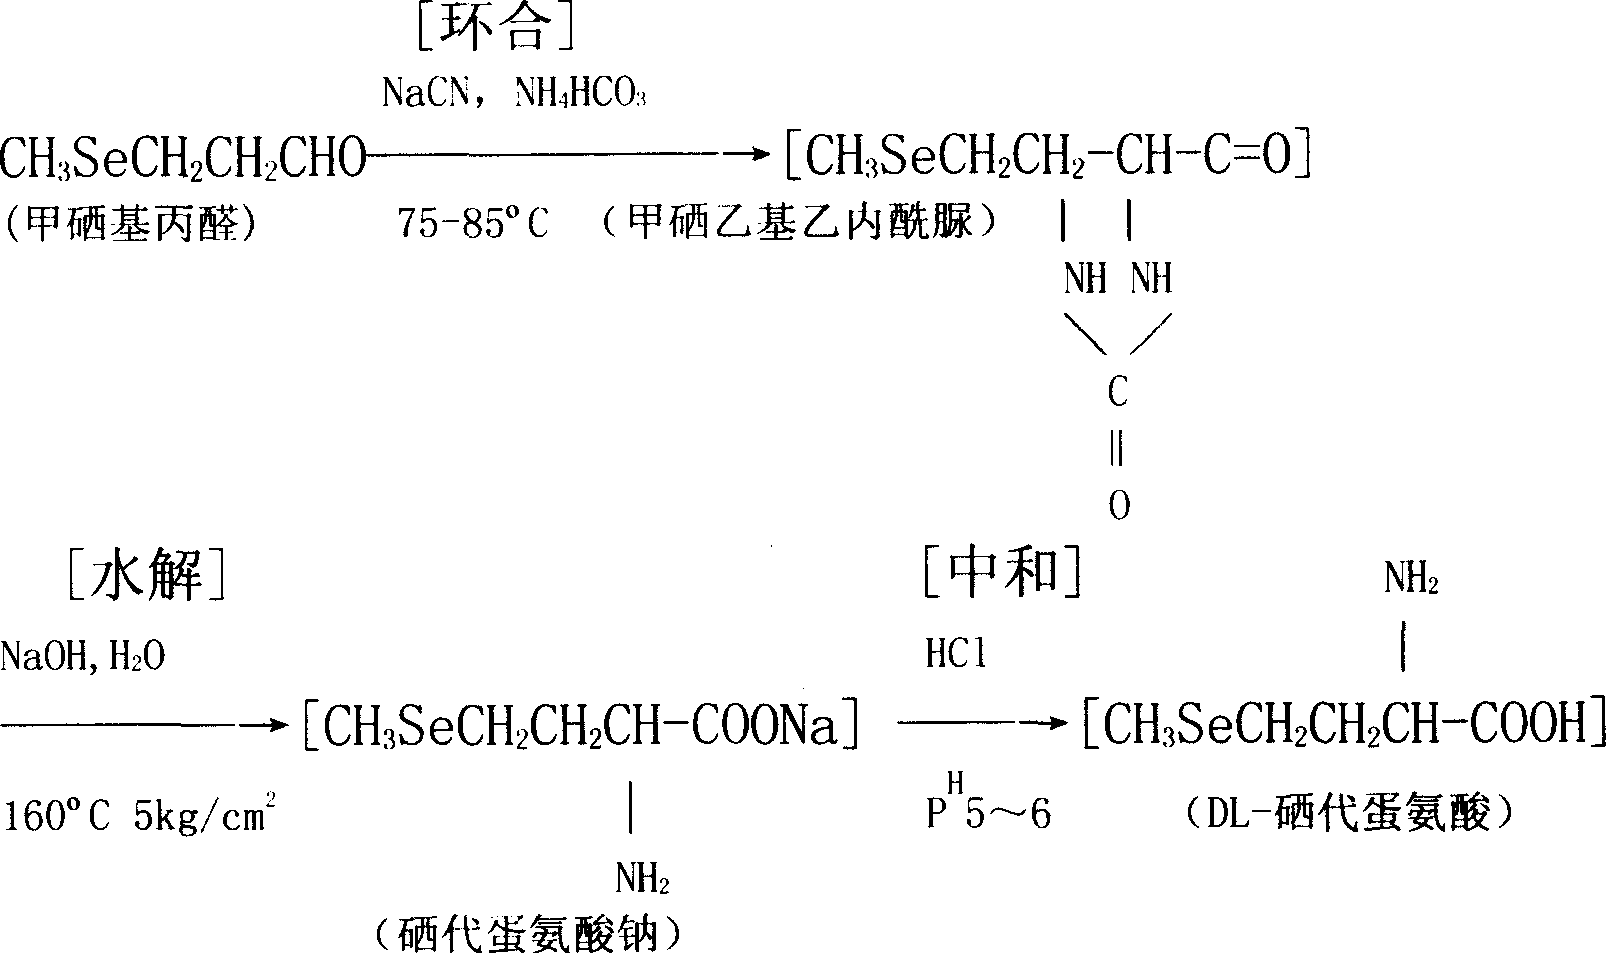 Methyleneseleno propanel method for preparing selenoic methionine